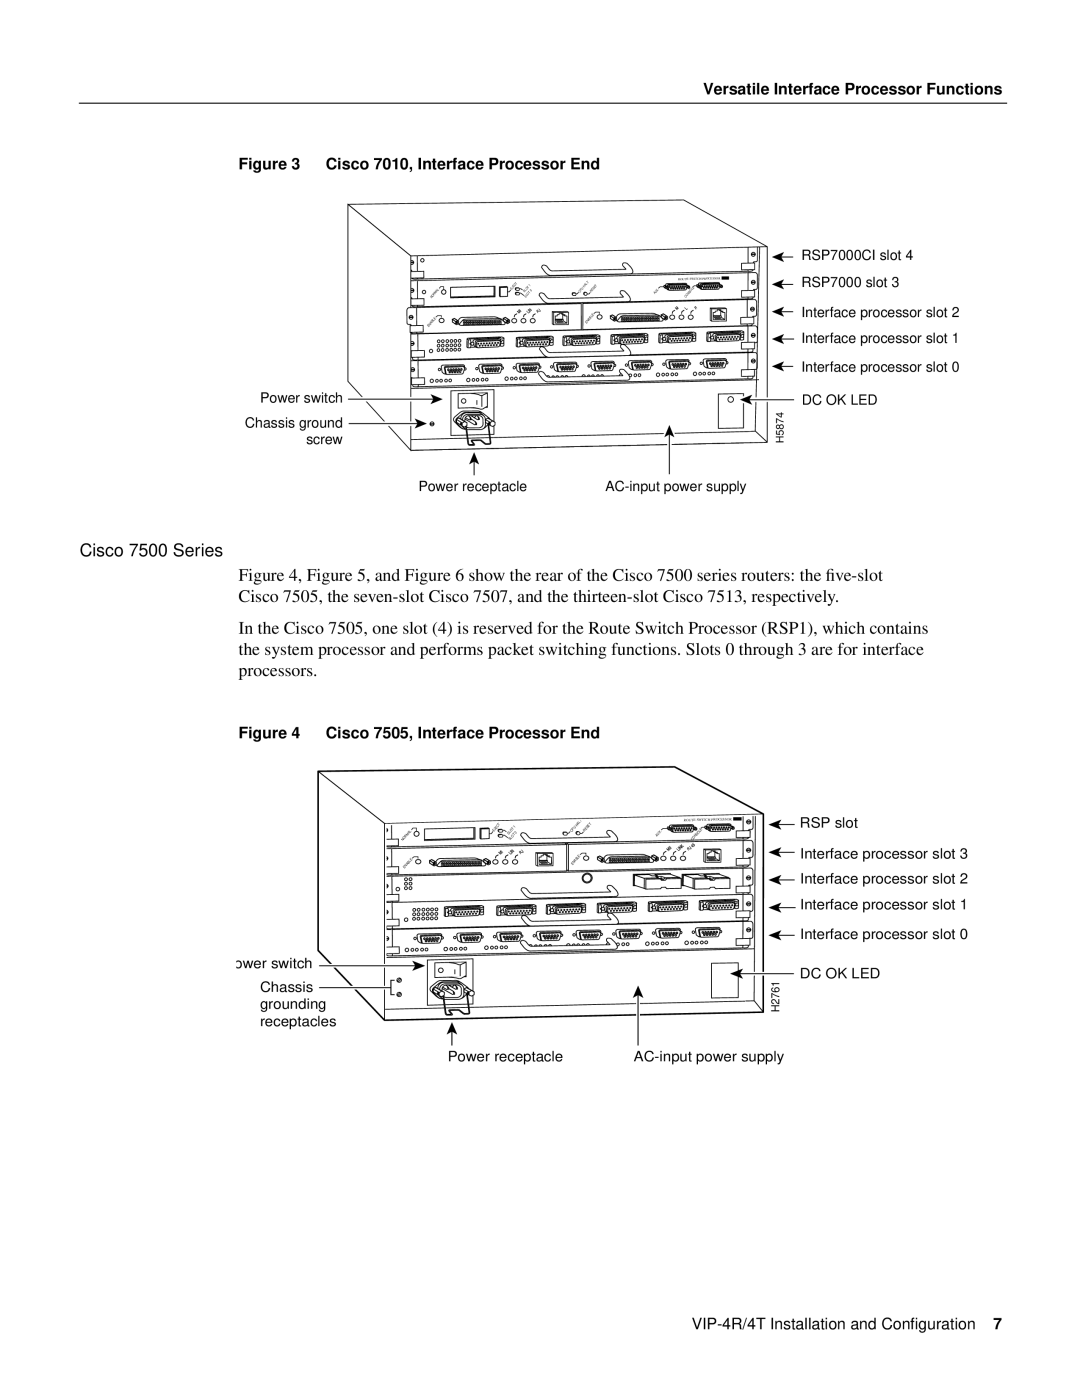 Cisco Systems VIP-4R/4T manual Cisco 7500 Series, AC-input power supply 